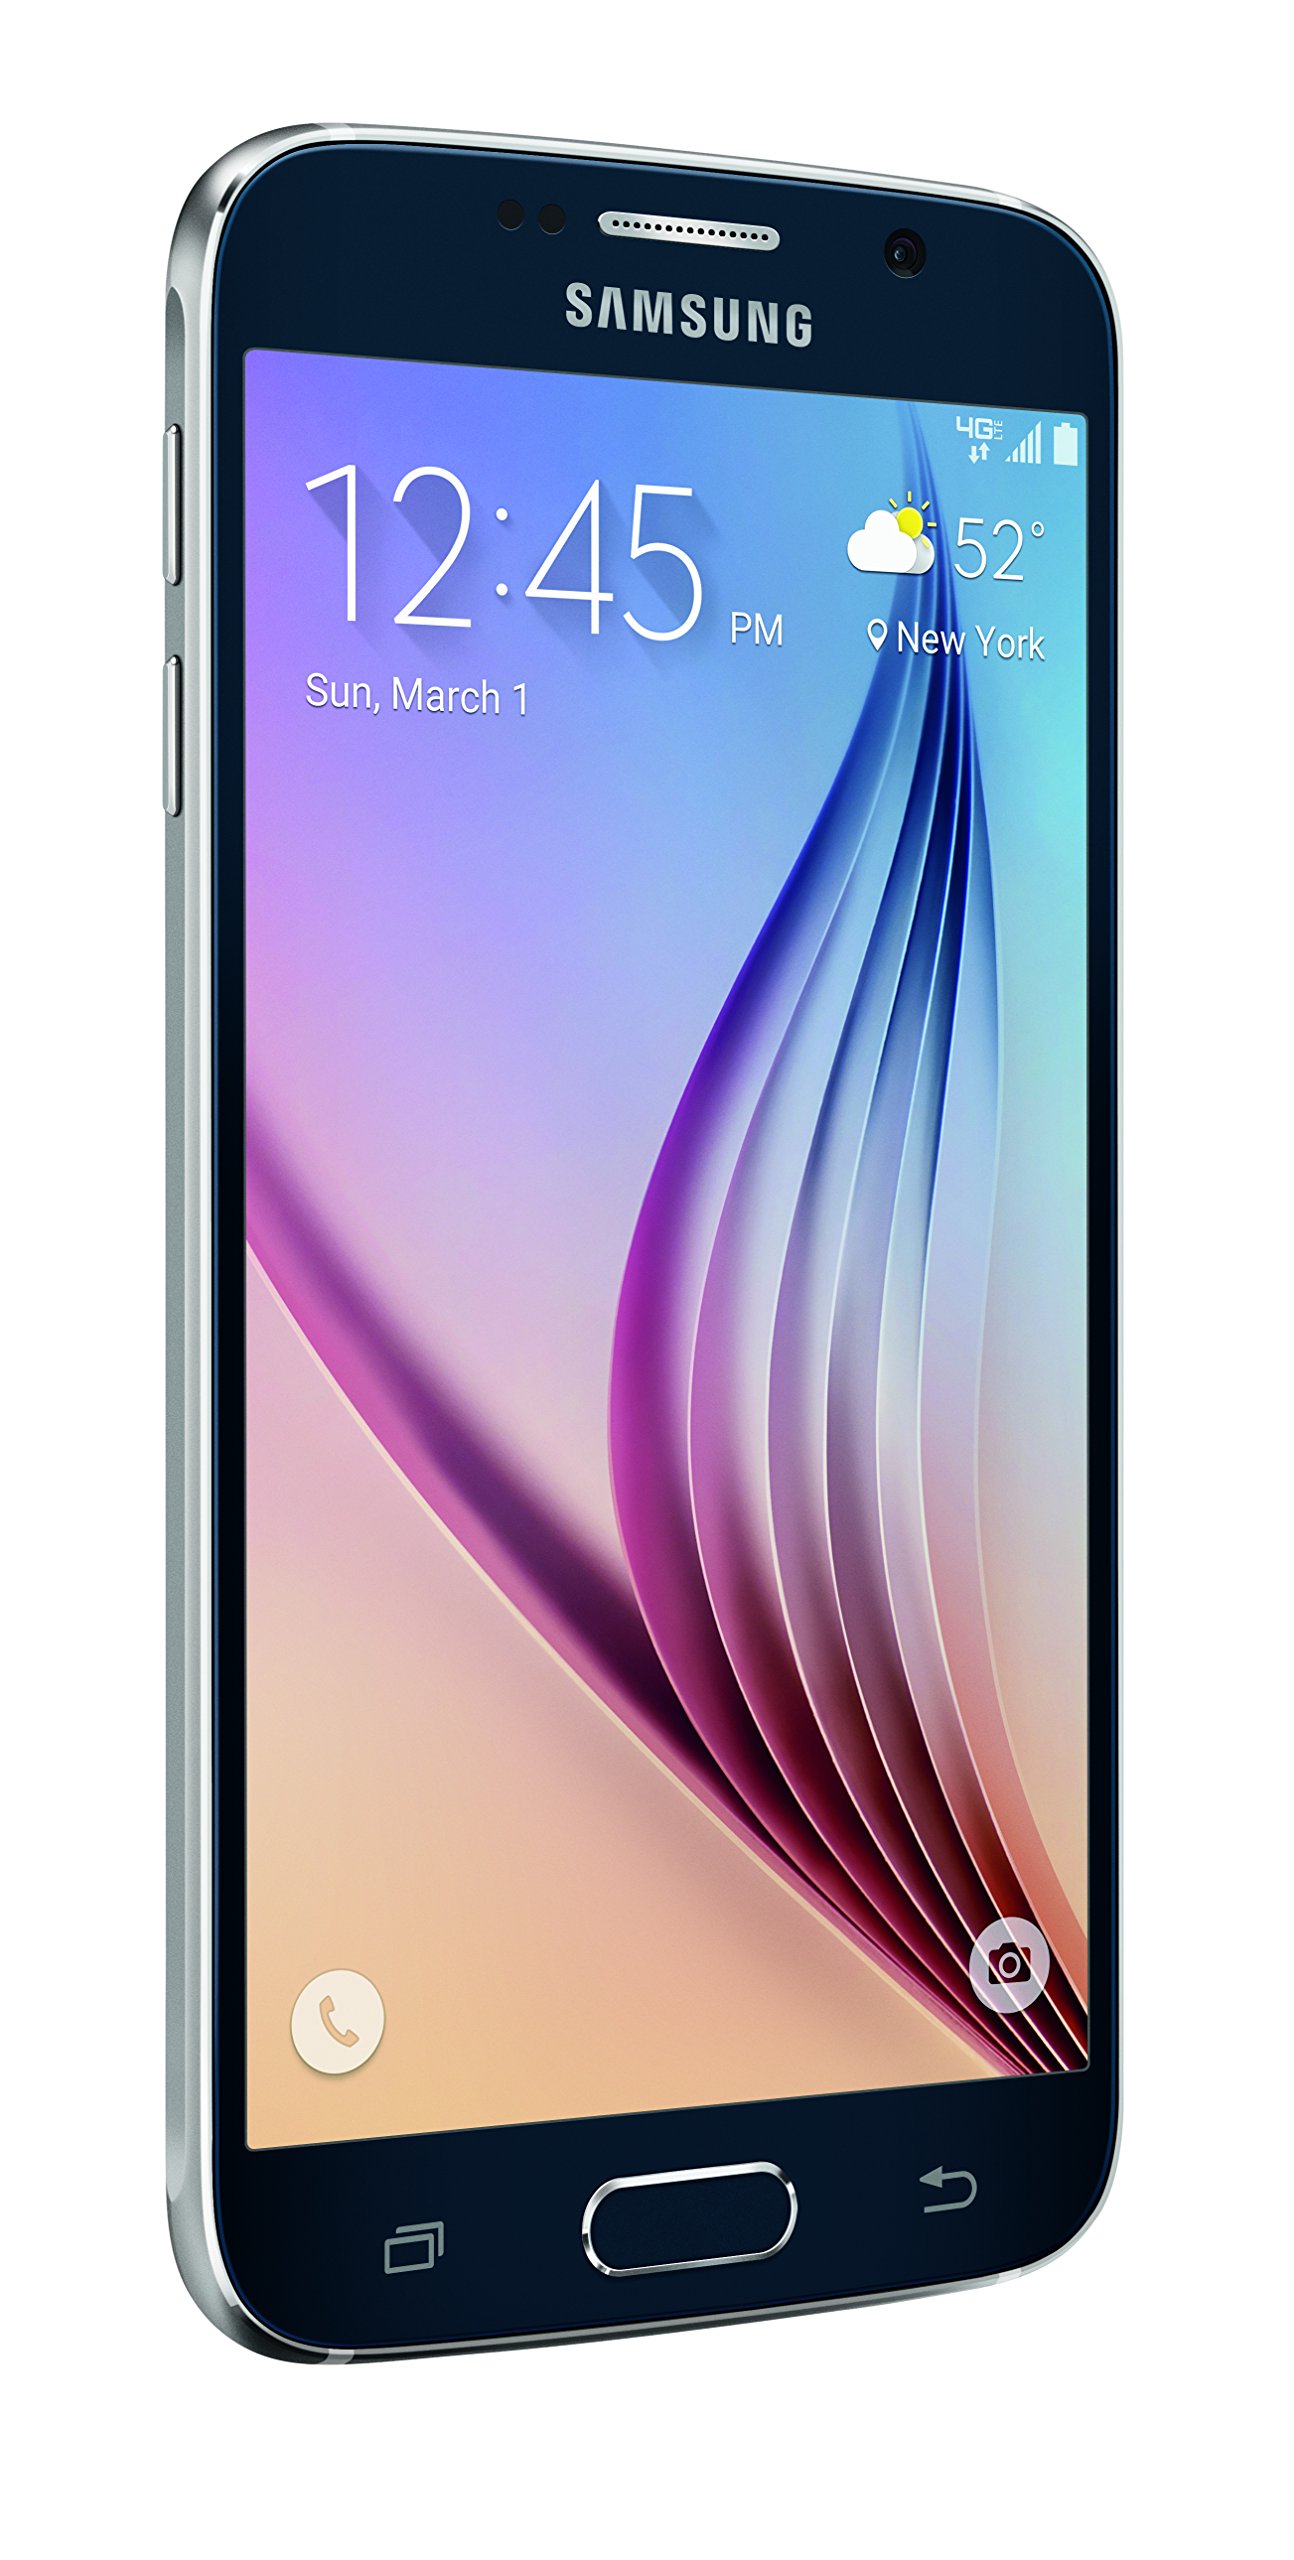 Samsung Galaxy S6, Black Sapphire 64GB (Verizon Wireless)